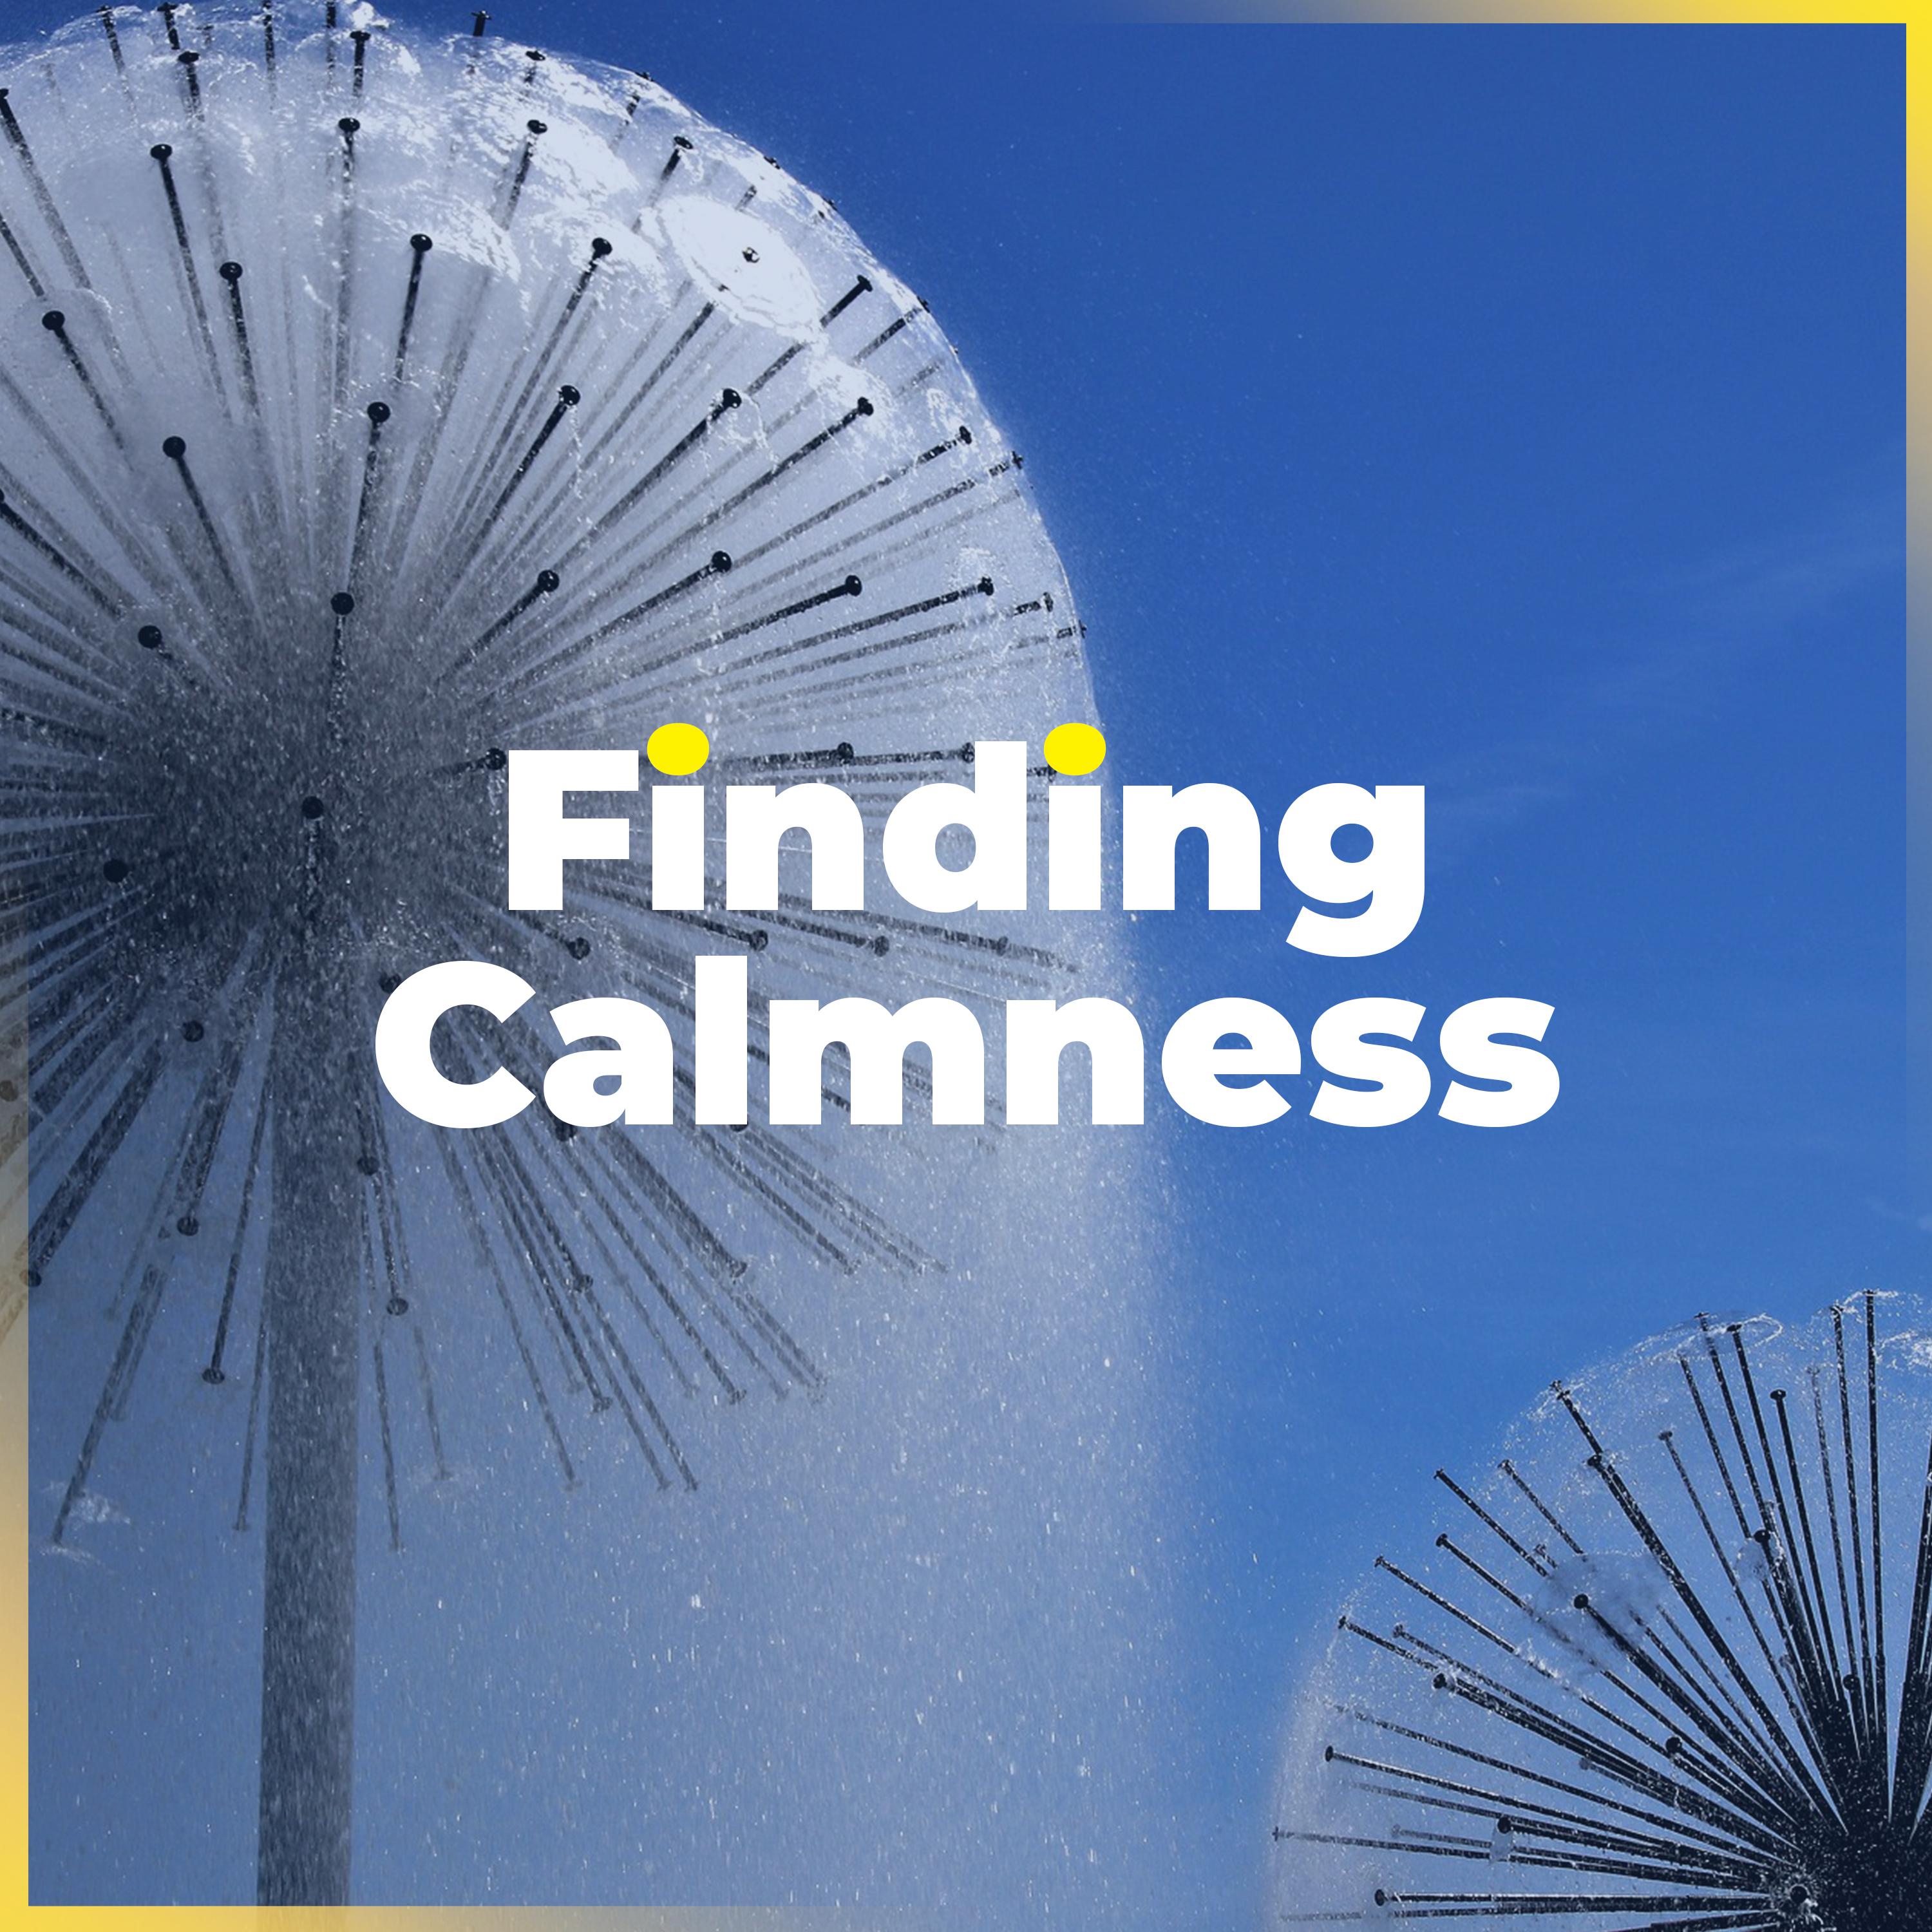 Finding Calmness